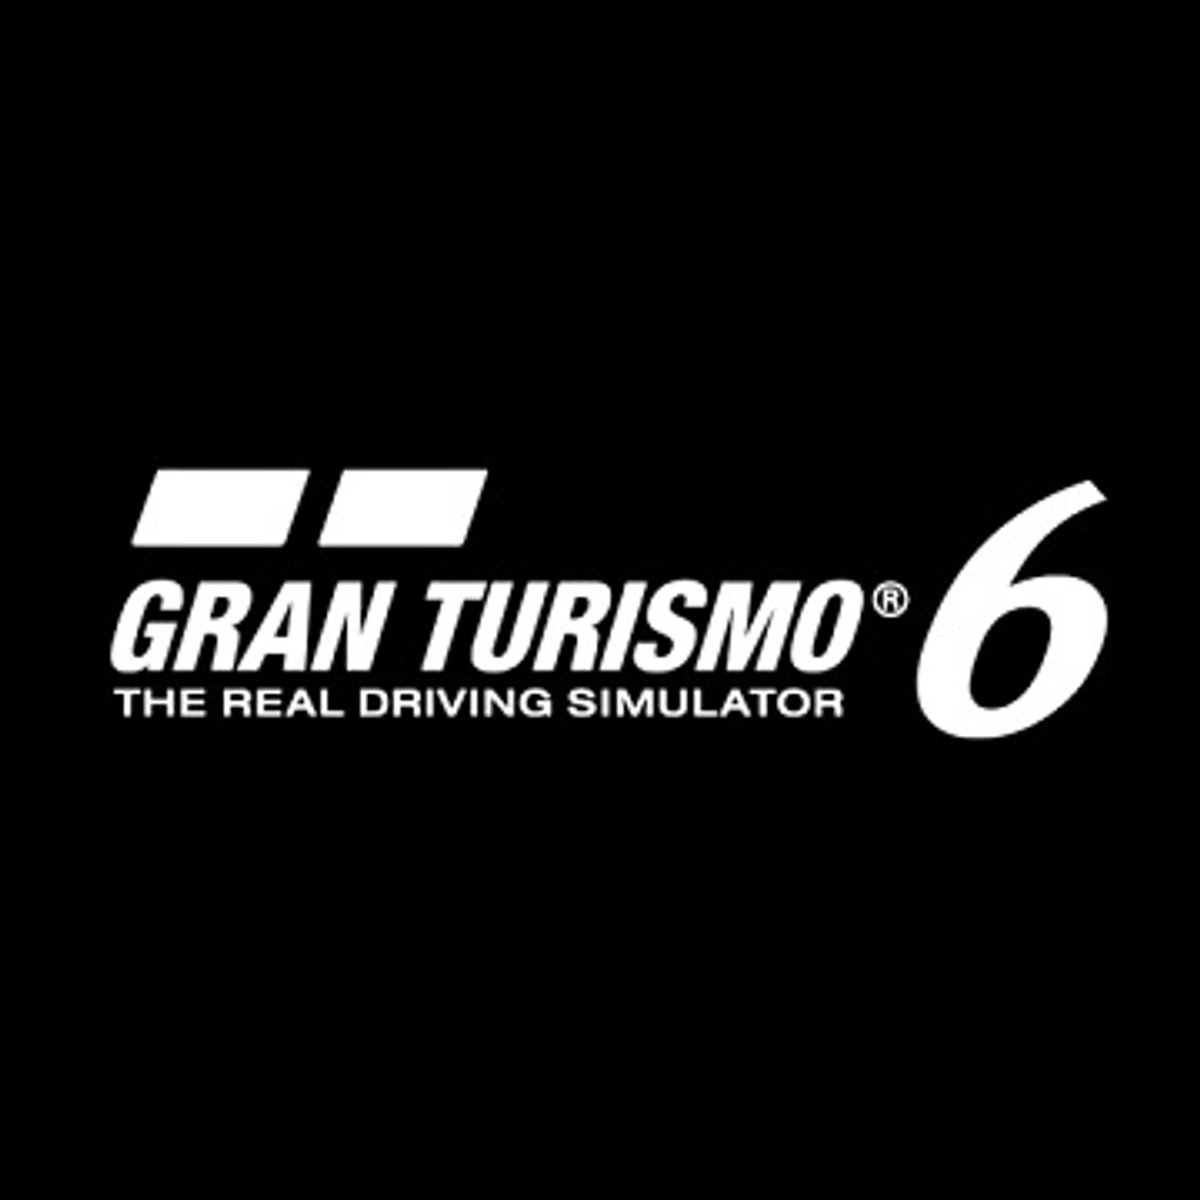 The Ultra Cheaty Suzuki Escudo Pikes Peak Is Returning to Gran Turismo